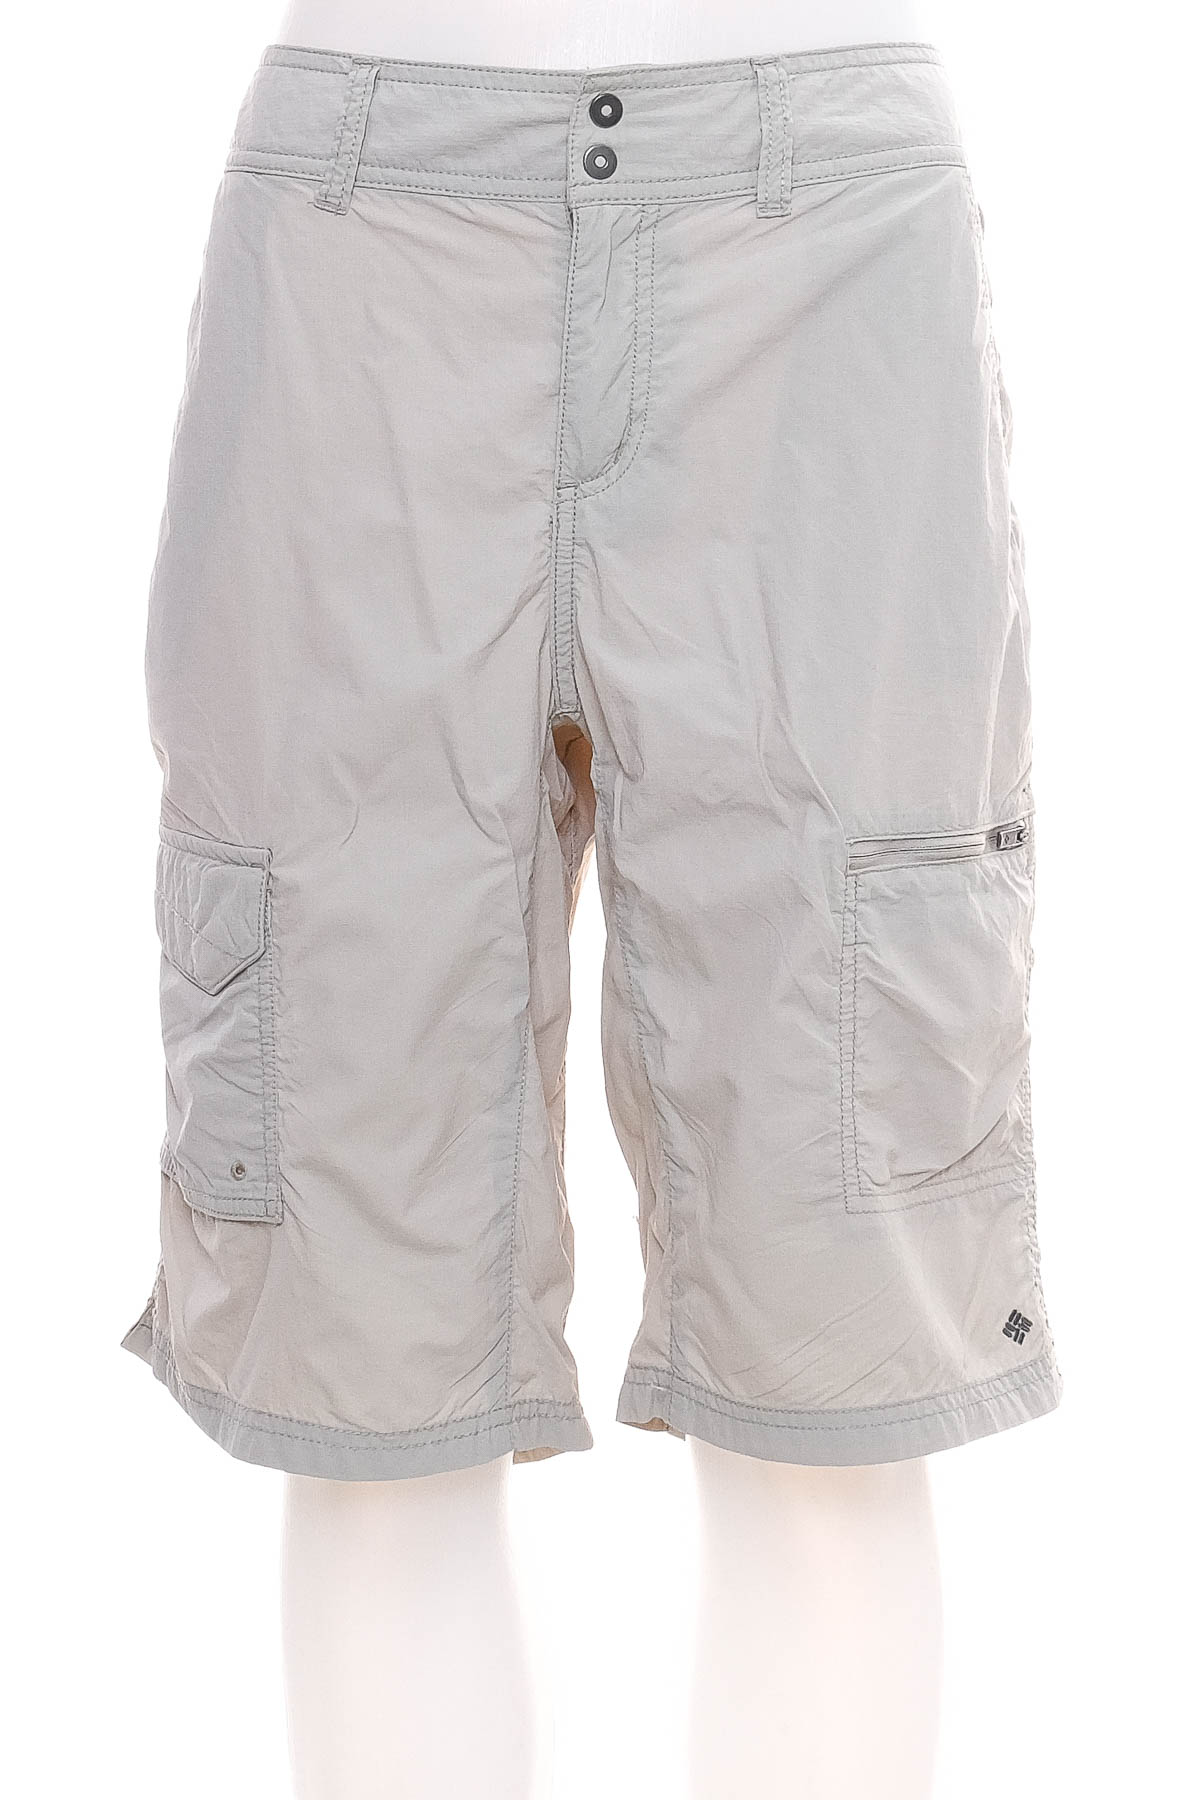 Men's shorts - Columbia - 0